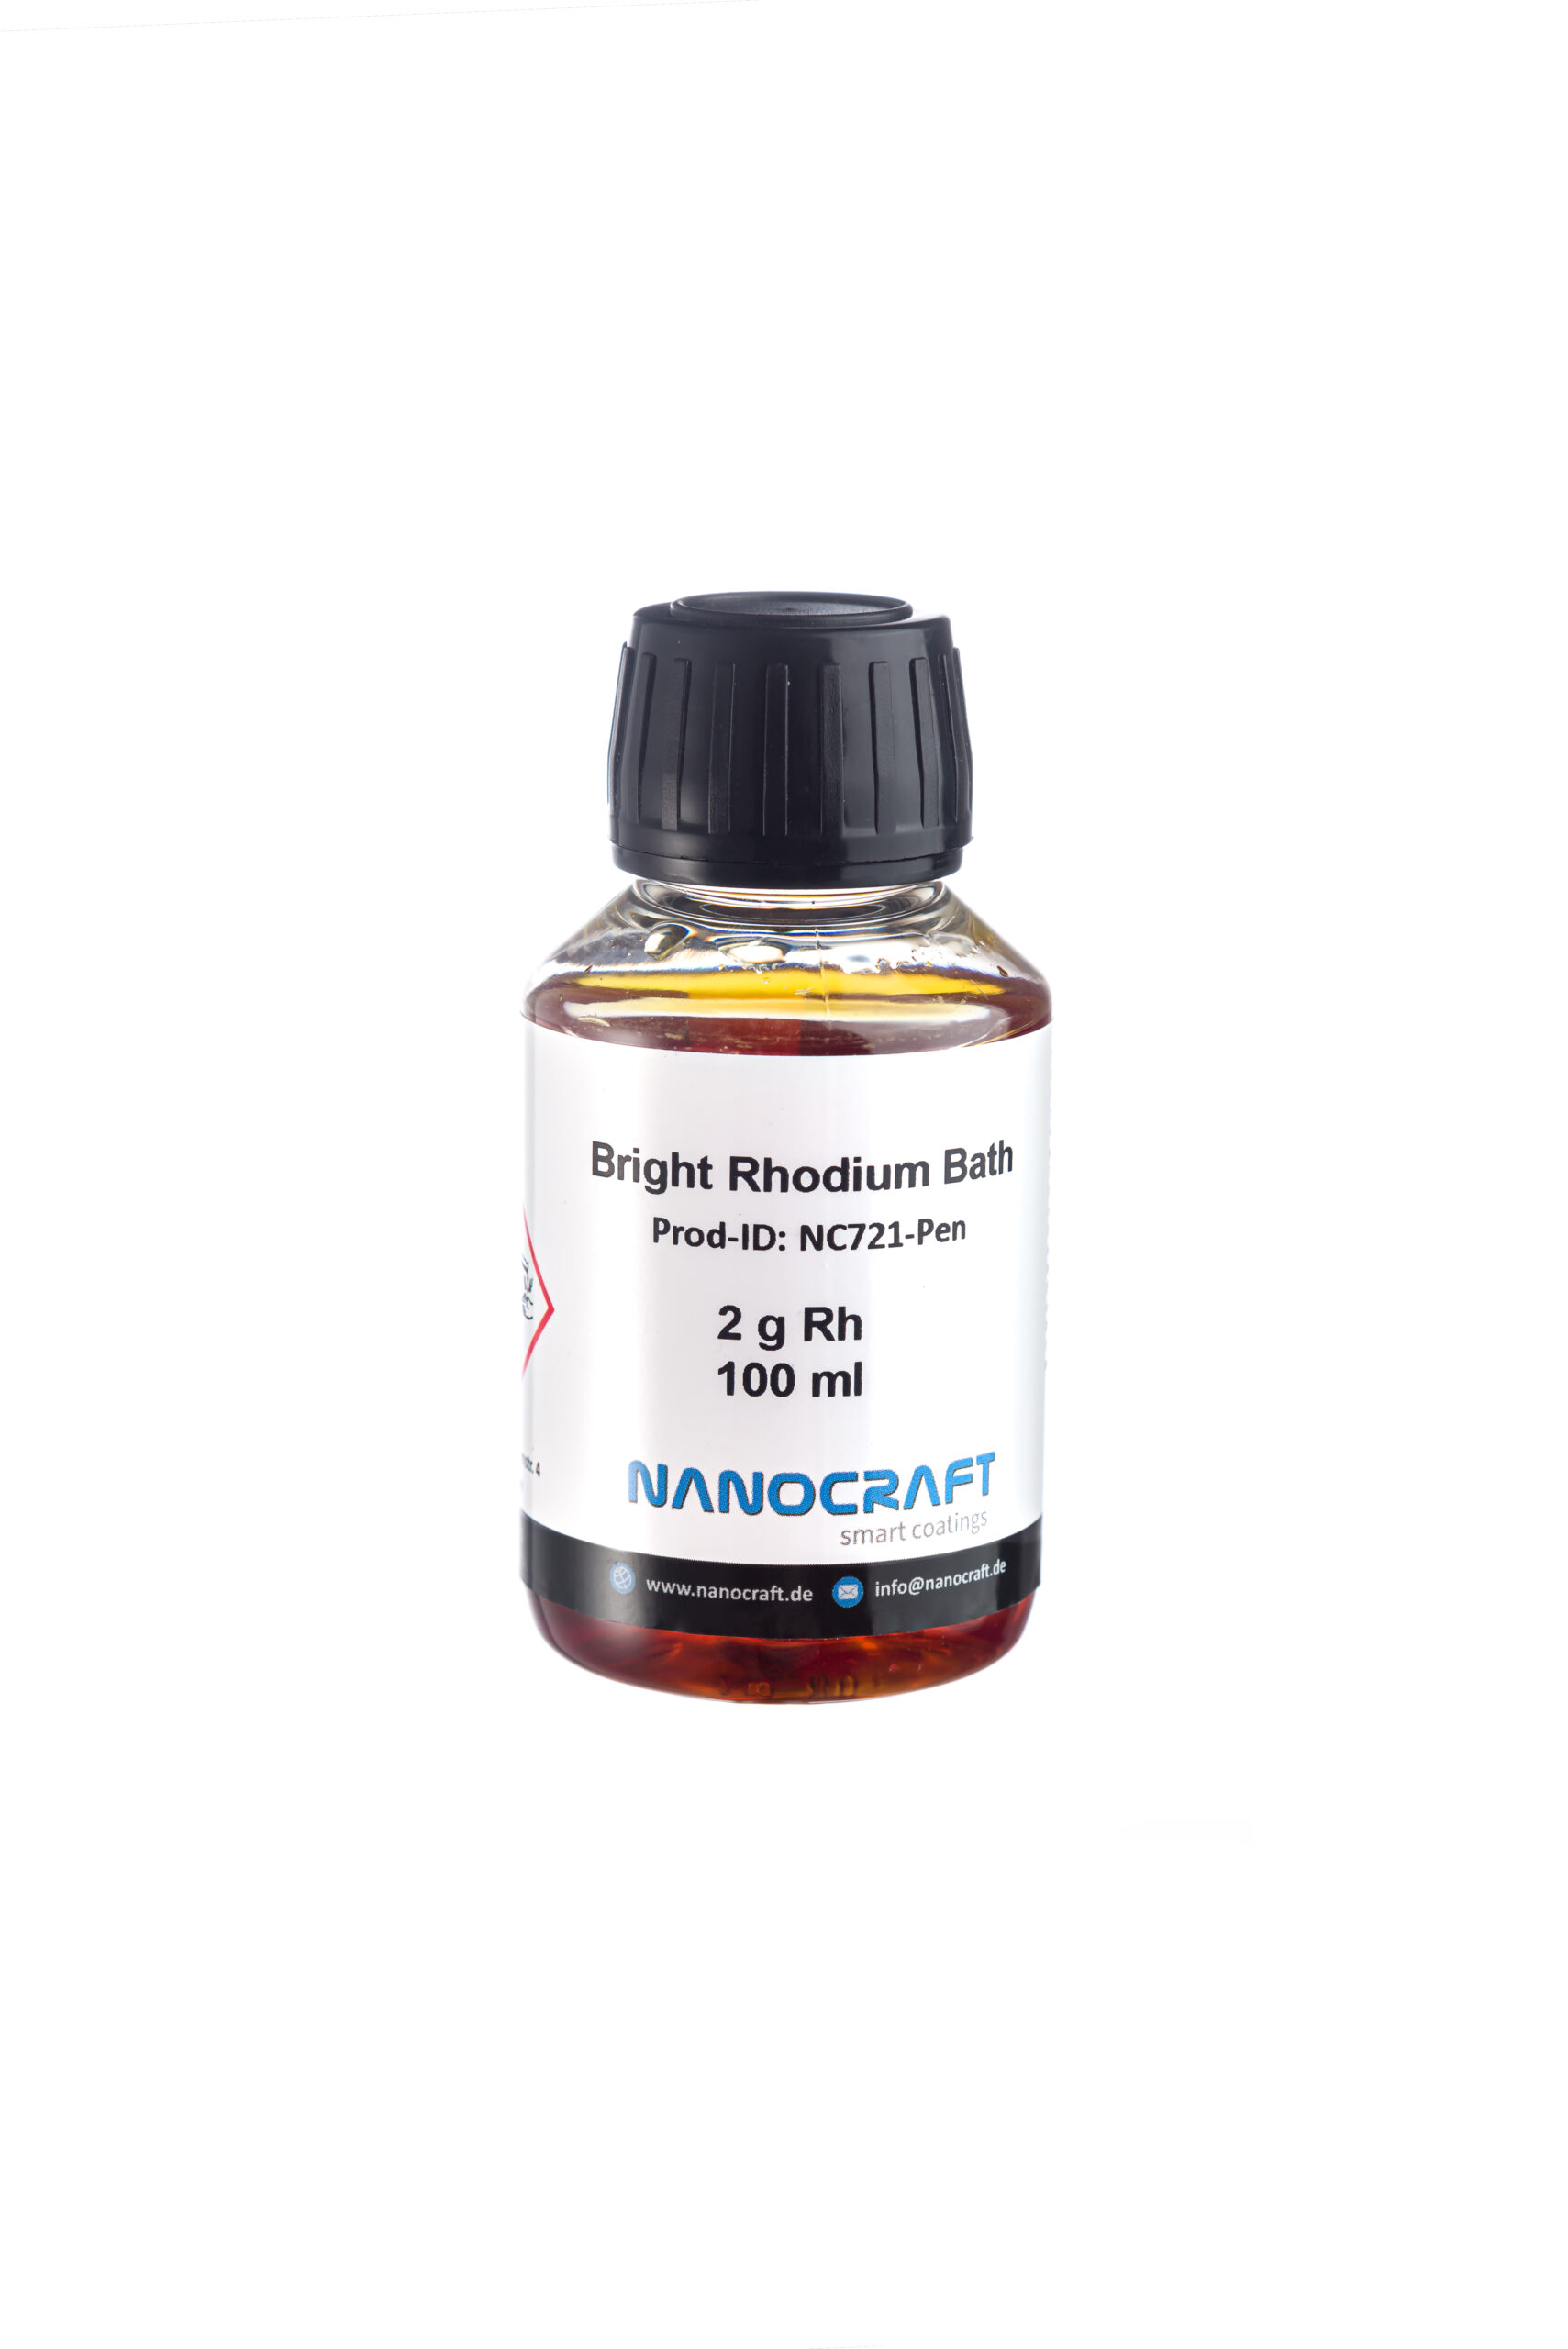 Bright Rhodium bath NC721 Pen